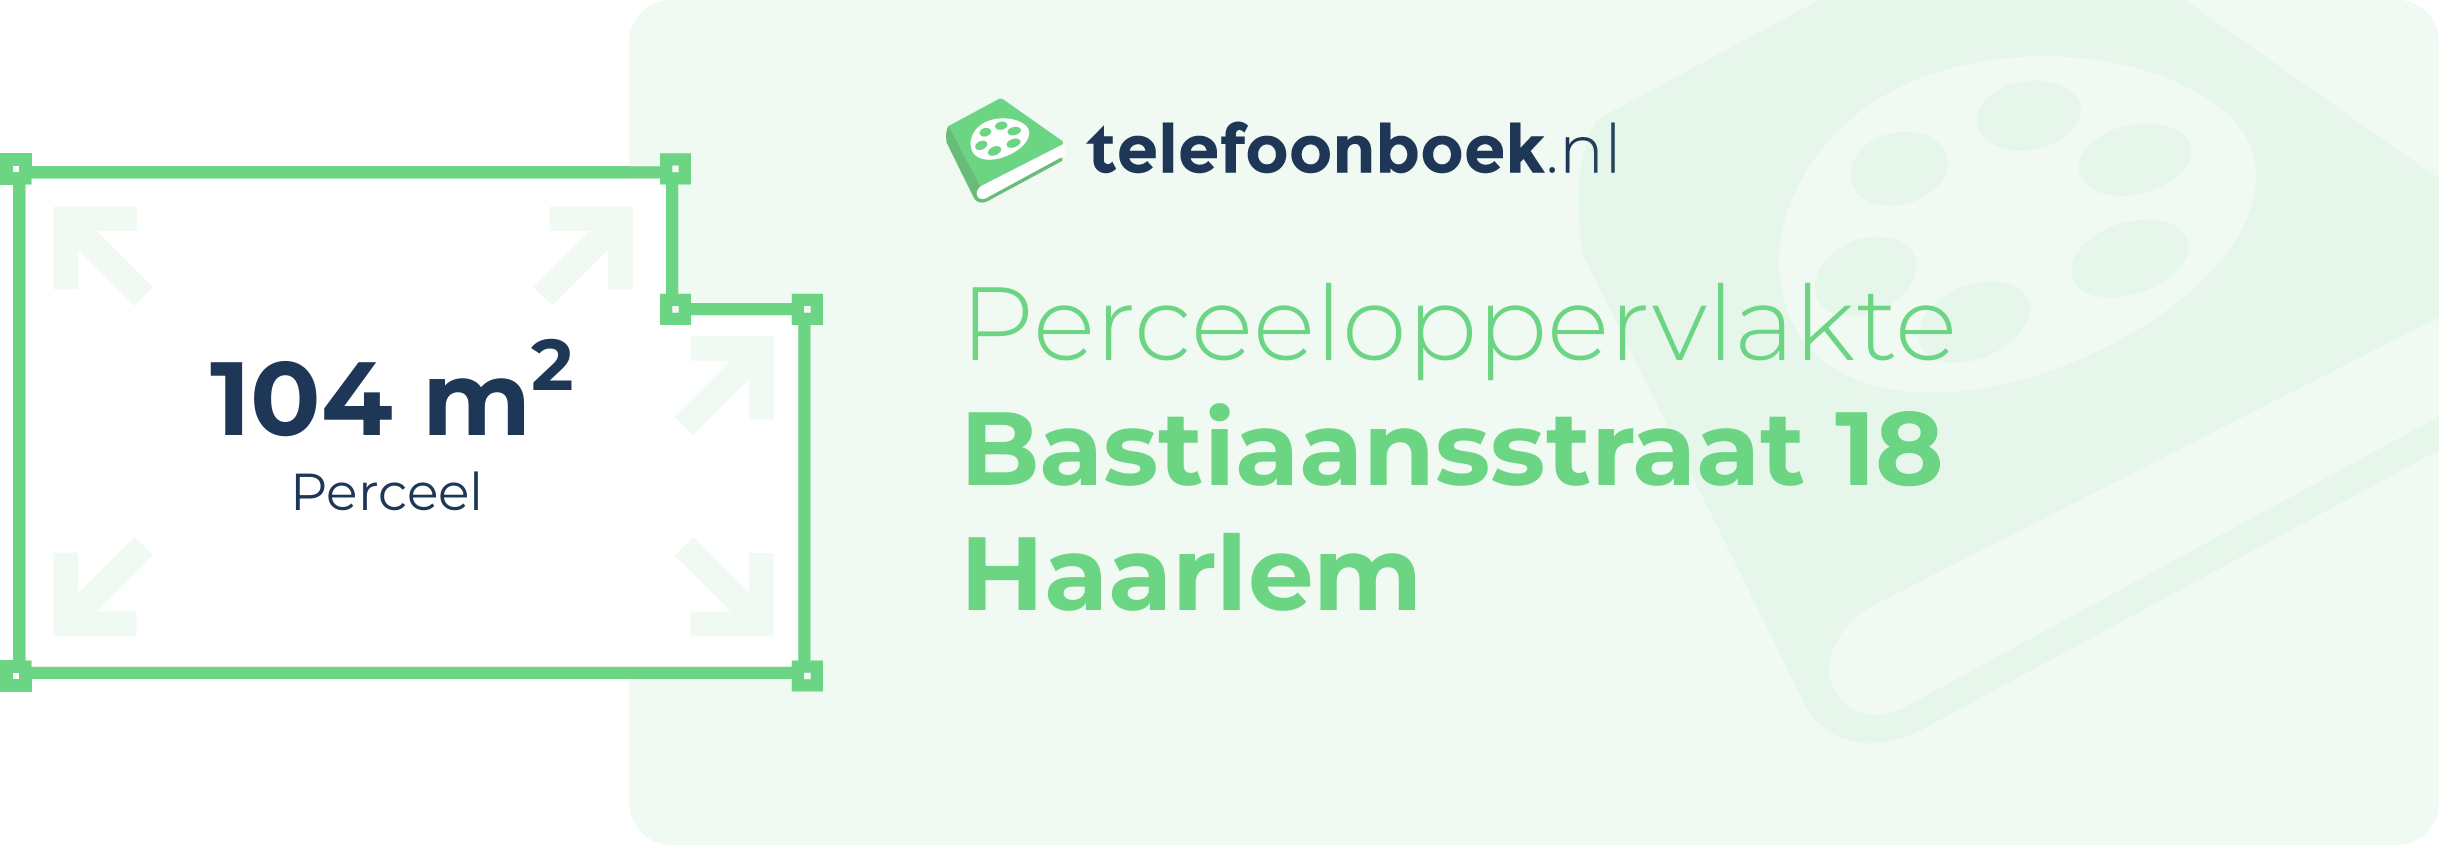 Perceeloppervlakte Bastiaansstraat 18 Haarlem